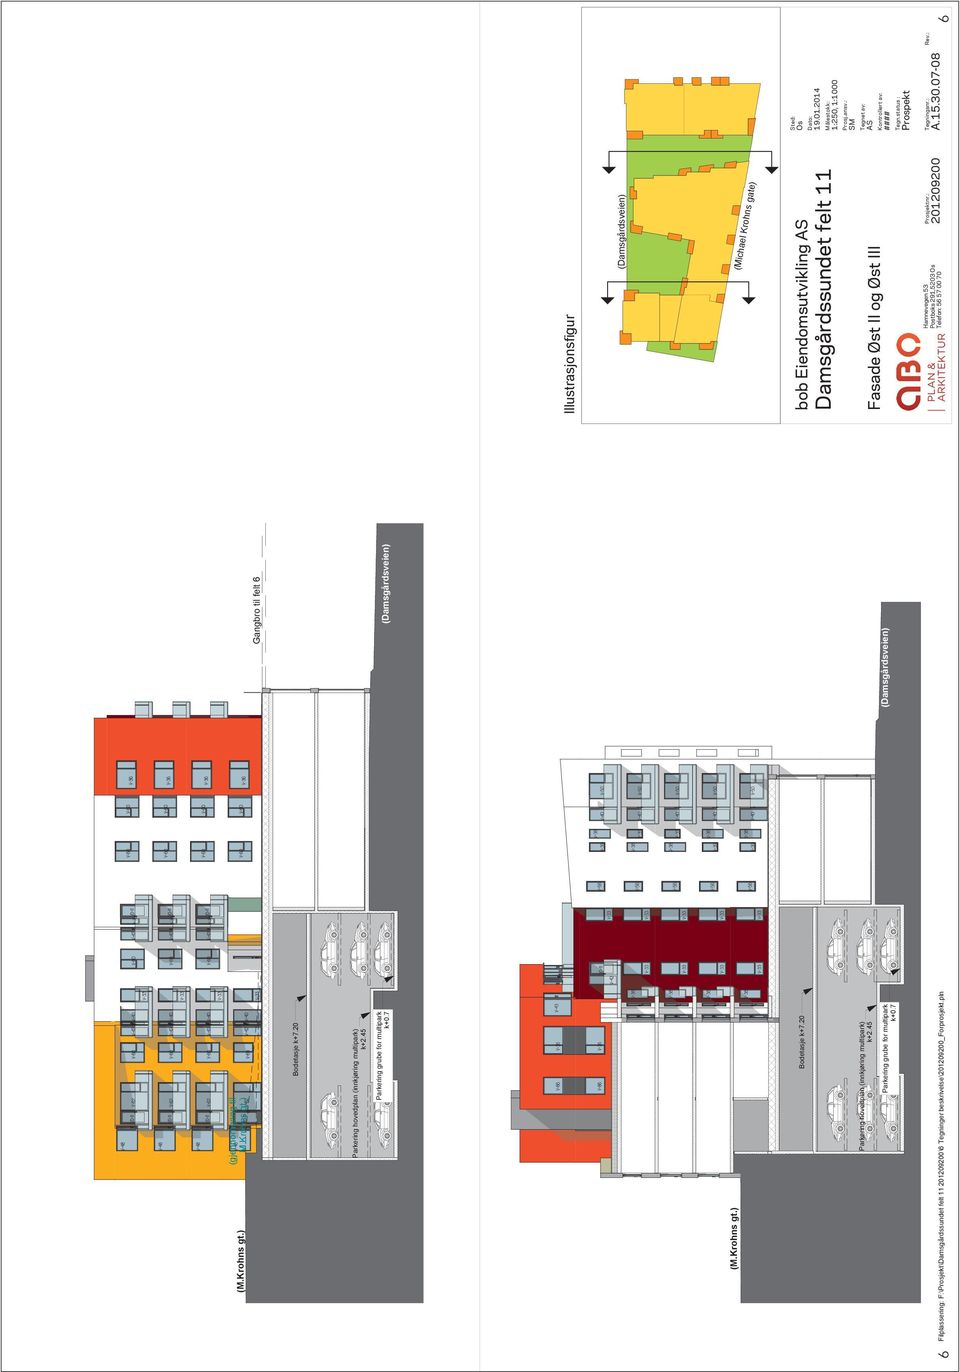 2014 Målestokk: 1:250, 1:1000 Parkering hovedplan (innkjøring ultipark) k+2.45 Parkering grube for ultipark k+0.7 (Dasgårdsveien) Fasade Øst II og Øst III Prosj.ansv.